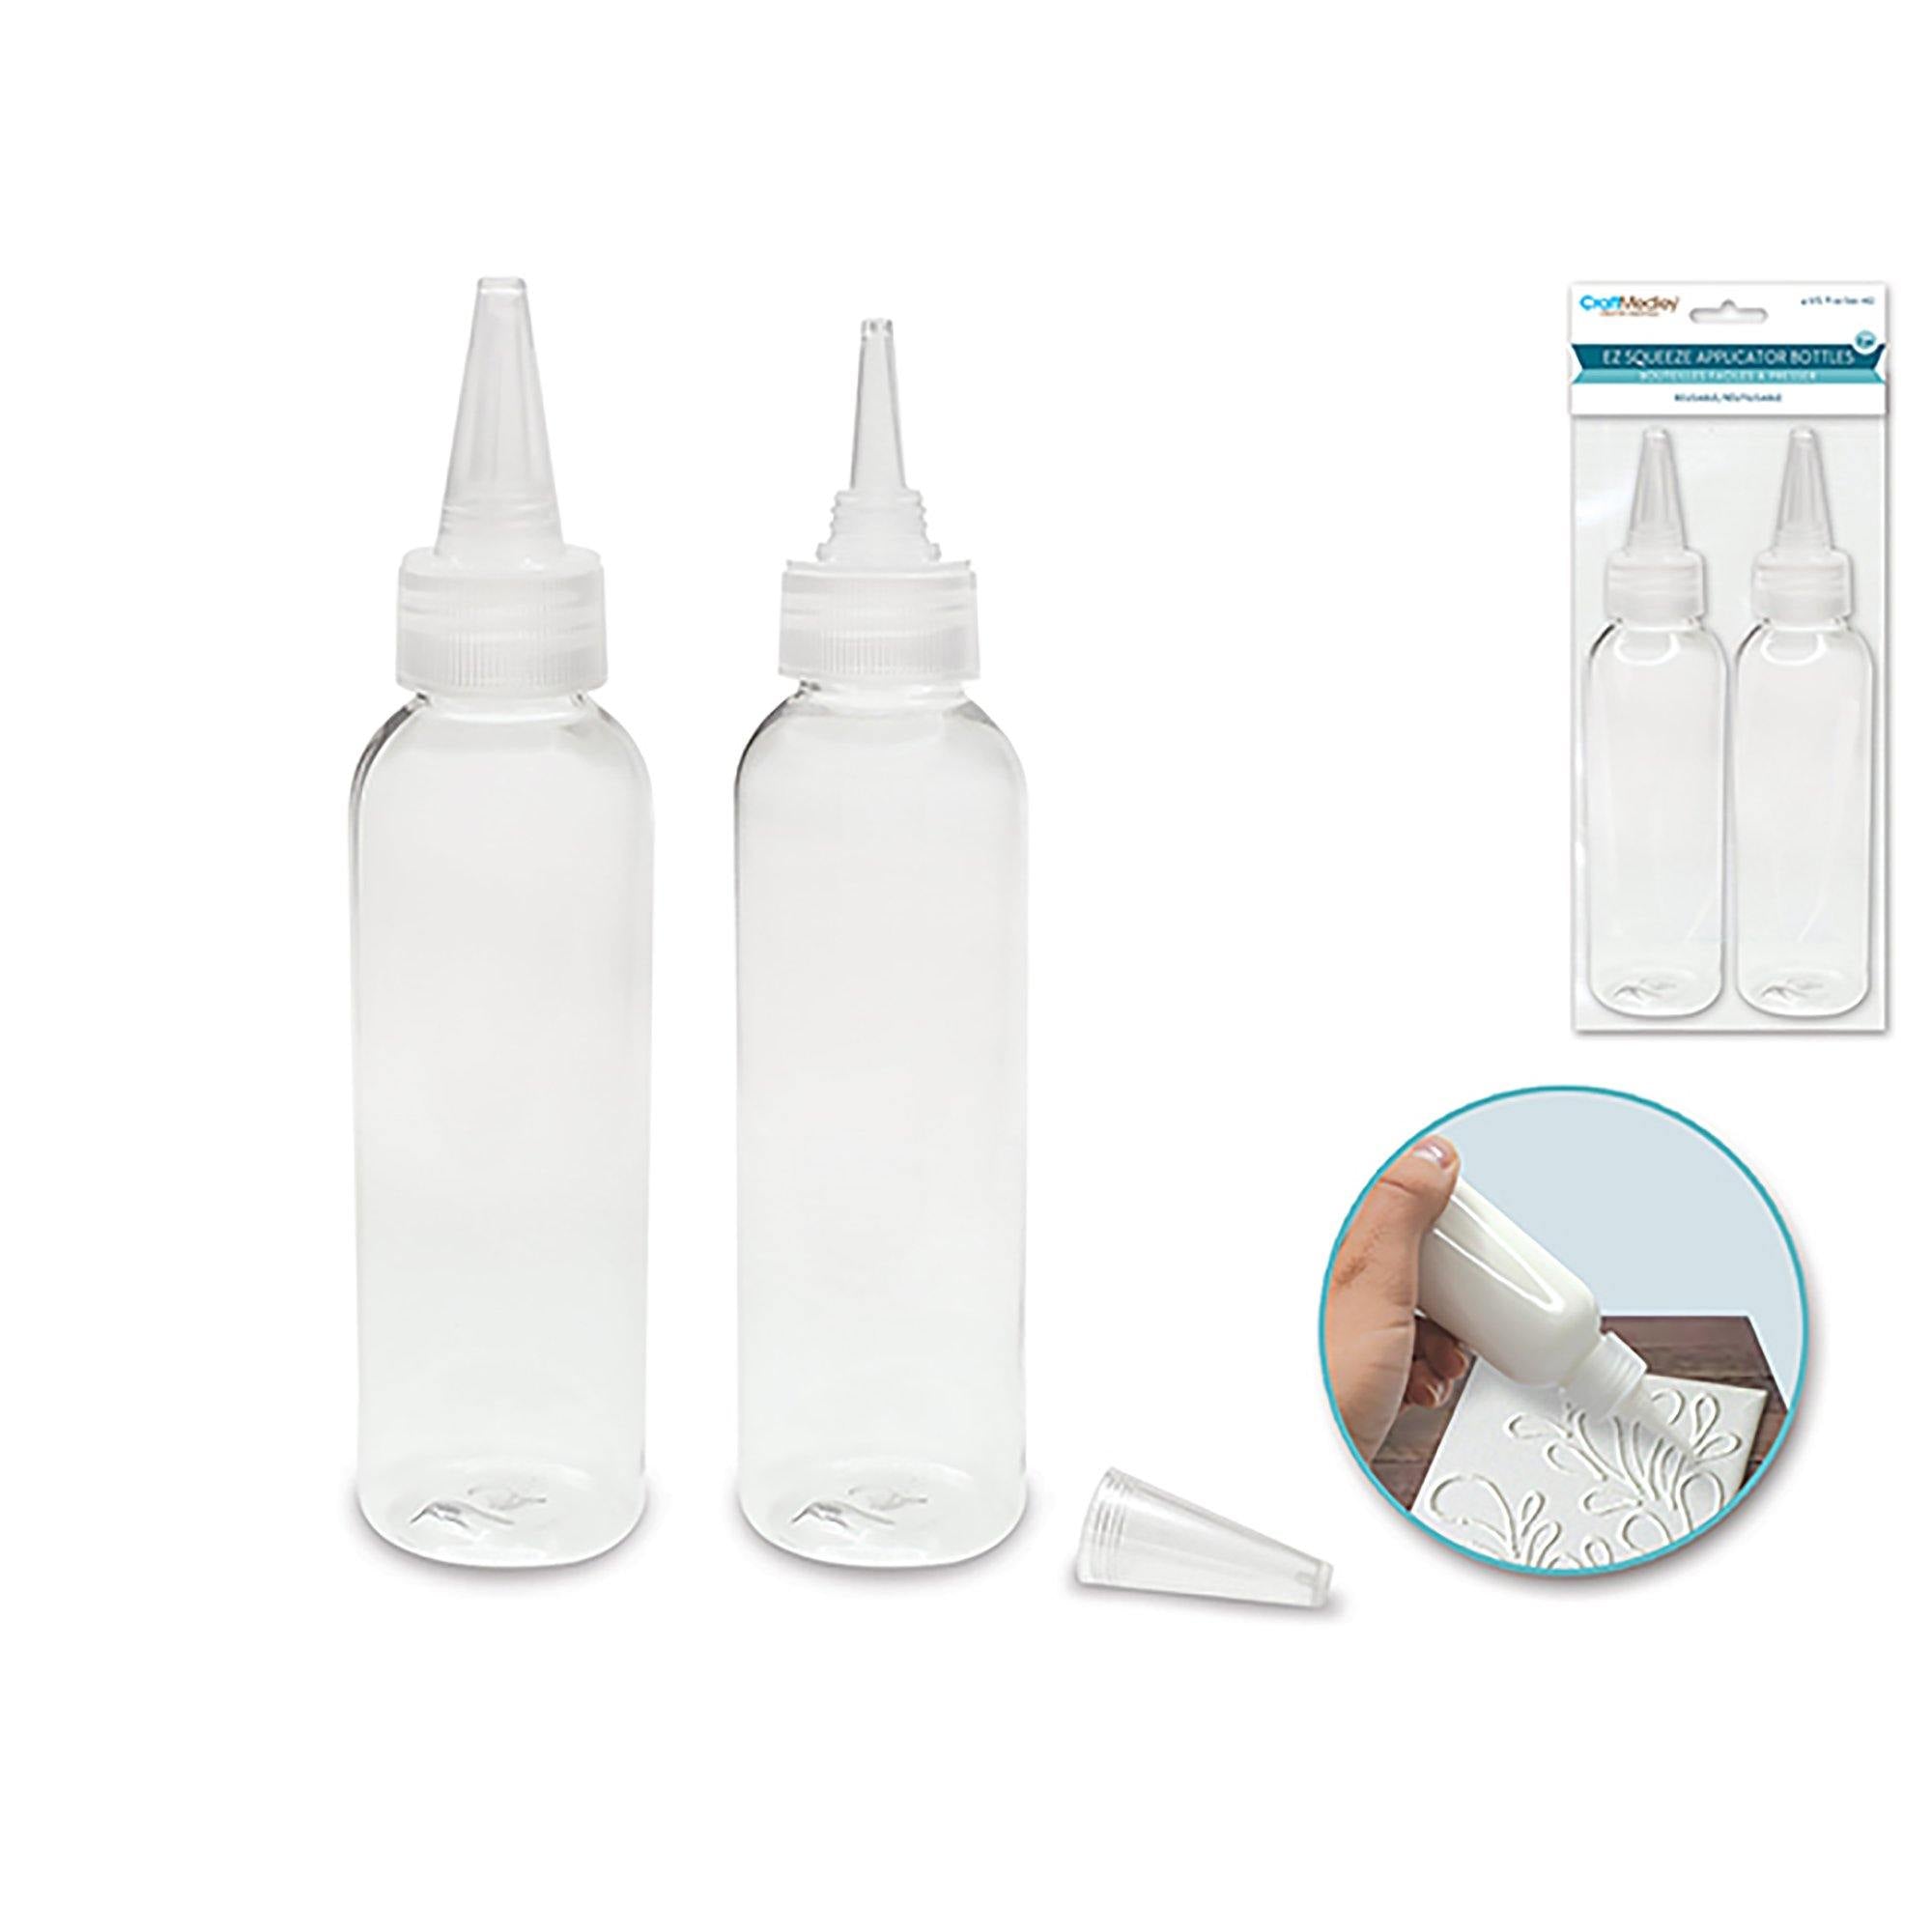 Craft Medley Plastic Writer/Glue Bottles, 2oz, Reusable, 2 oz